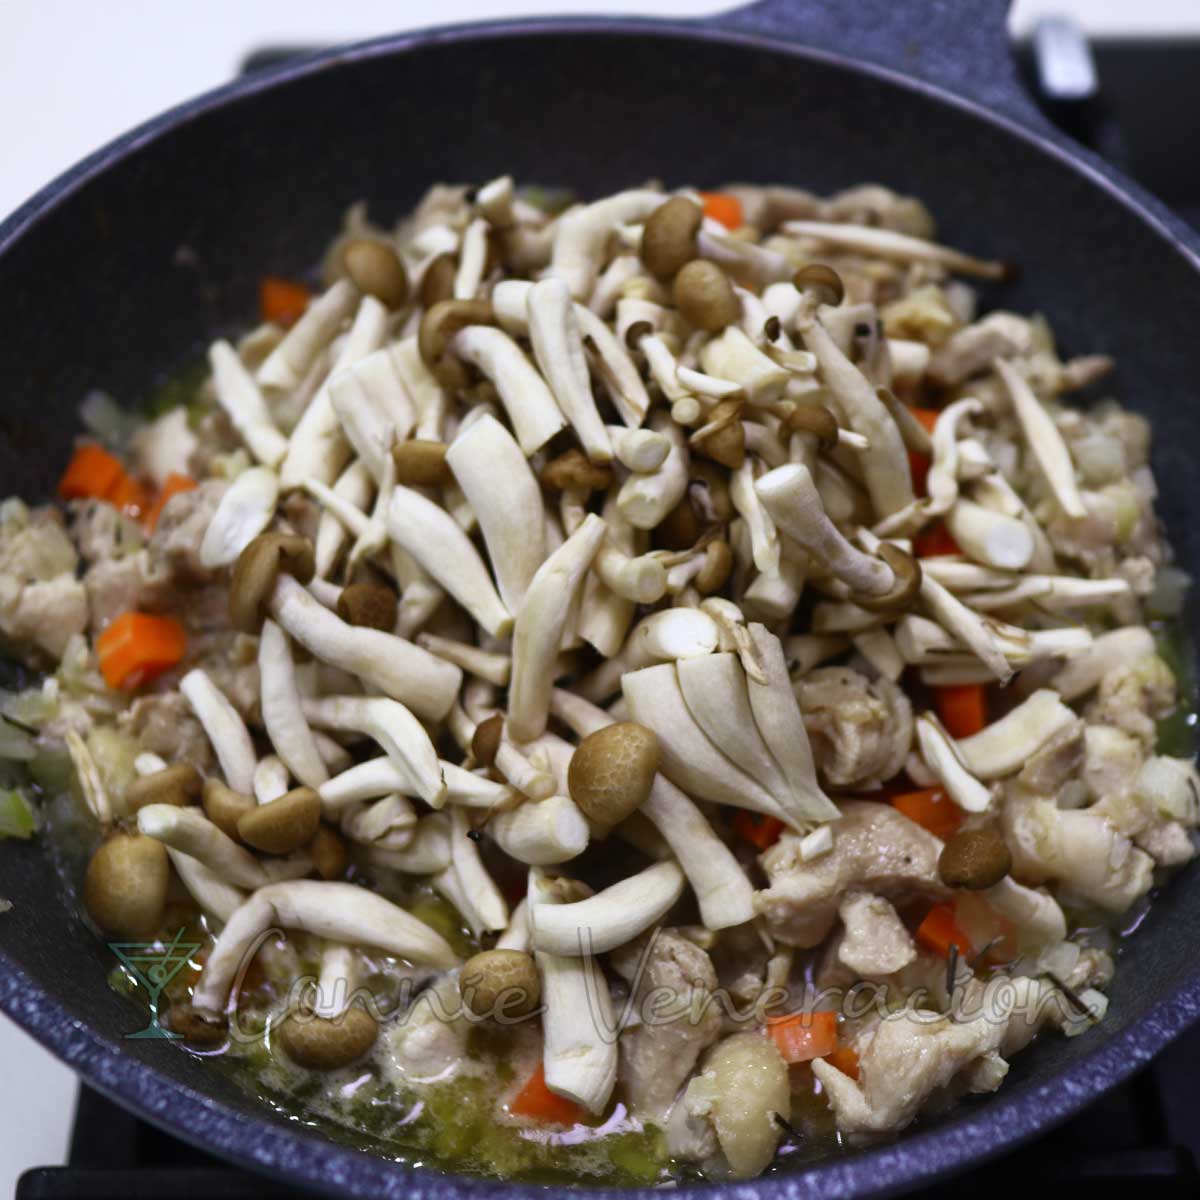 Chicken, mushrooms and vegetables in pan